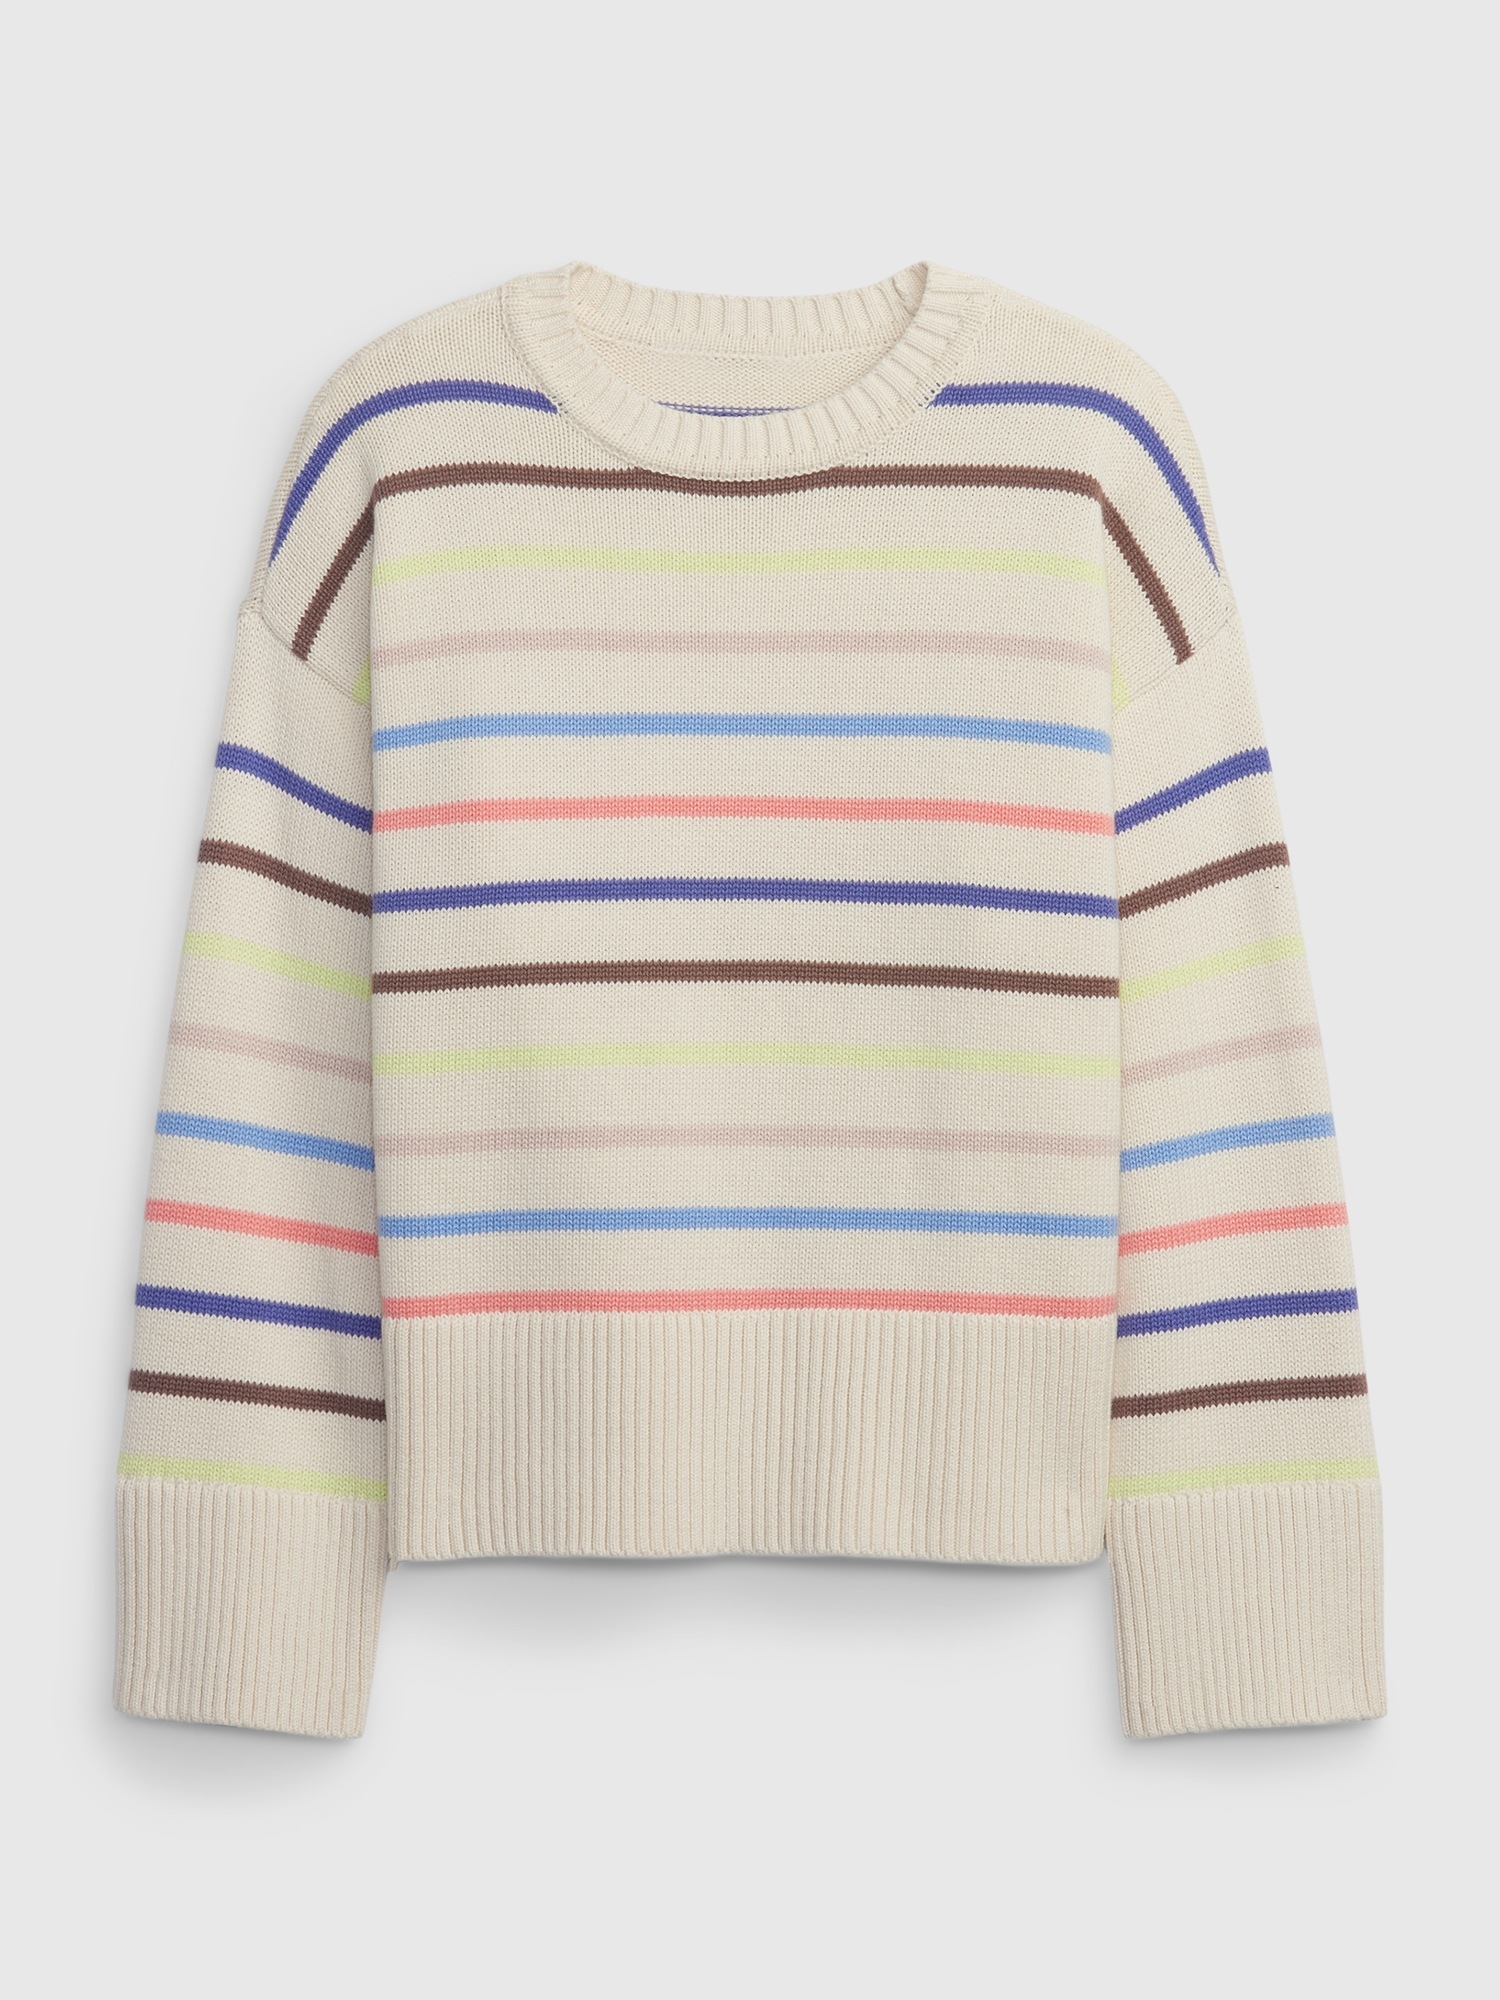 Gap Kids Pullover Sweater multi. 1